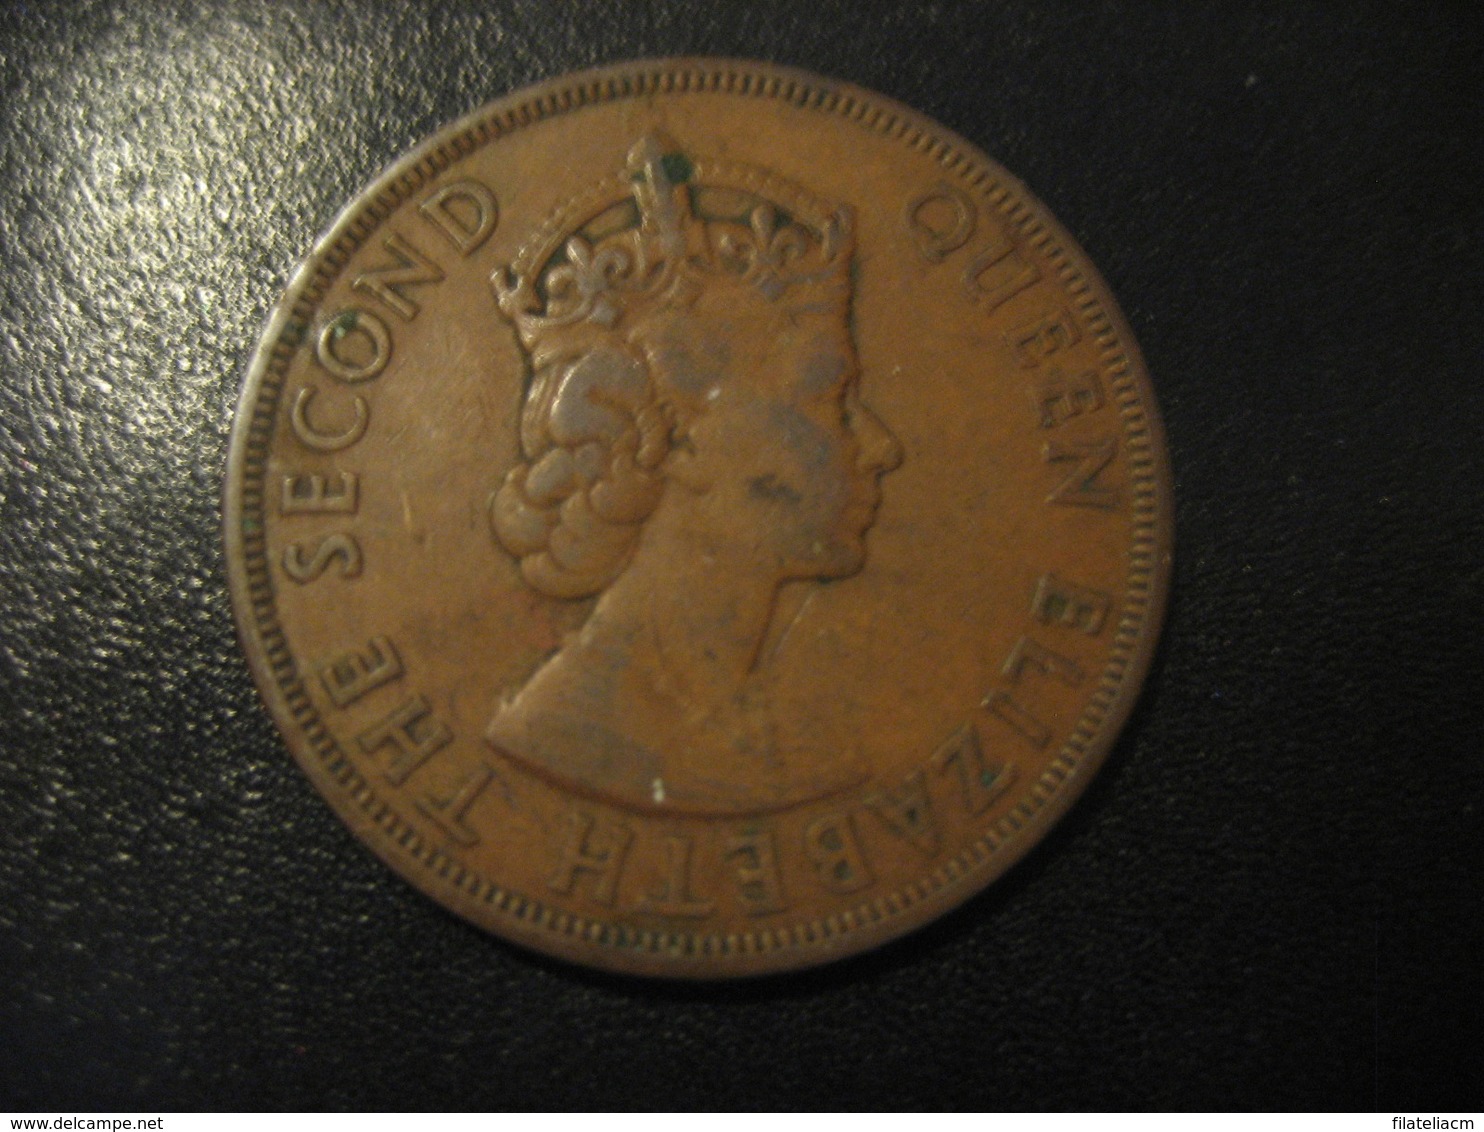 2 Cents BRITISH CARIBBEAN TERRITORIES 1955 Coin British West Indies Antillas - Antillas